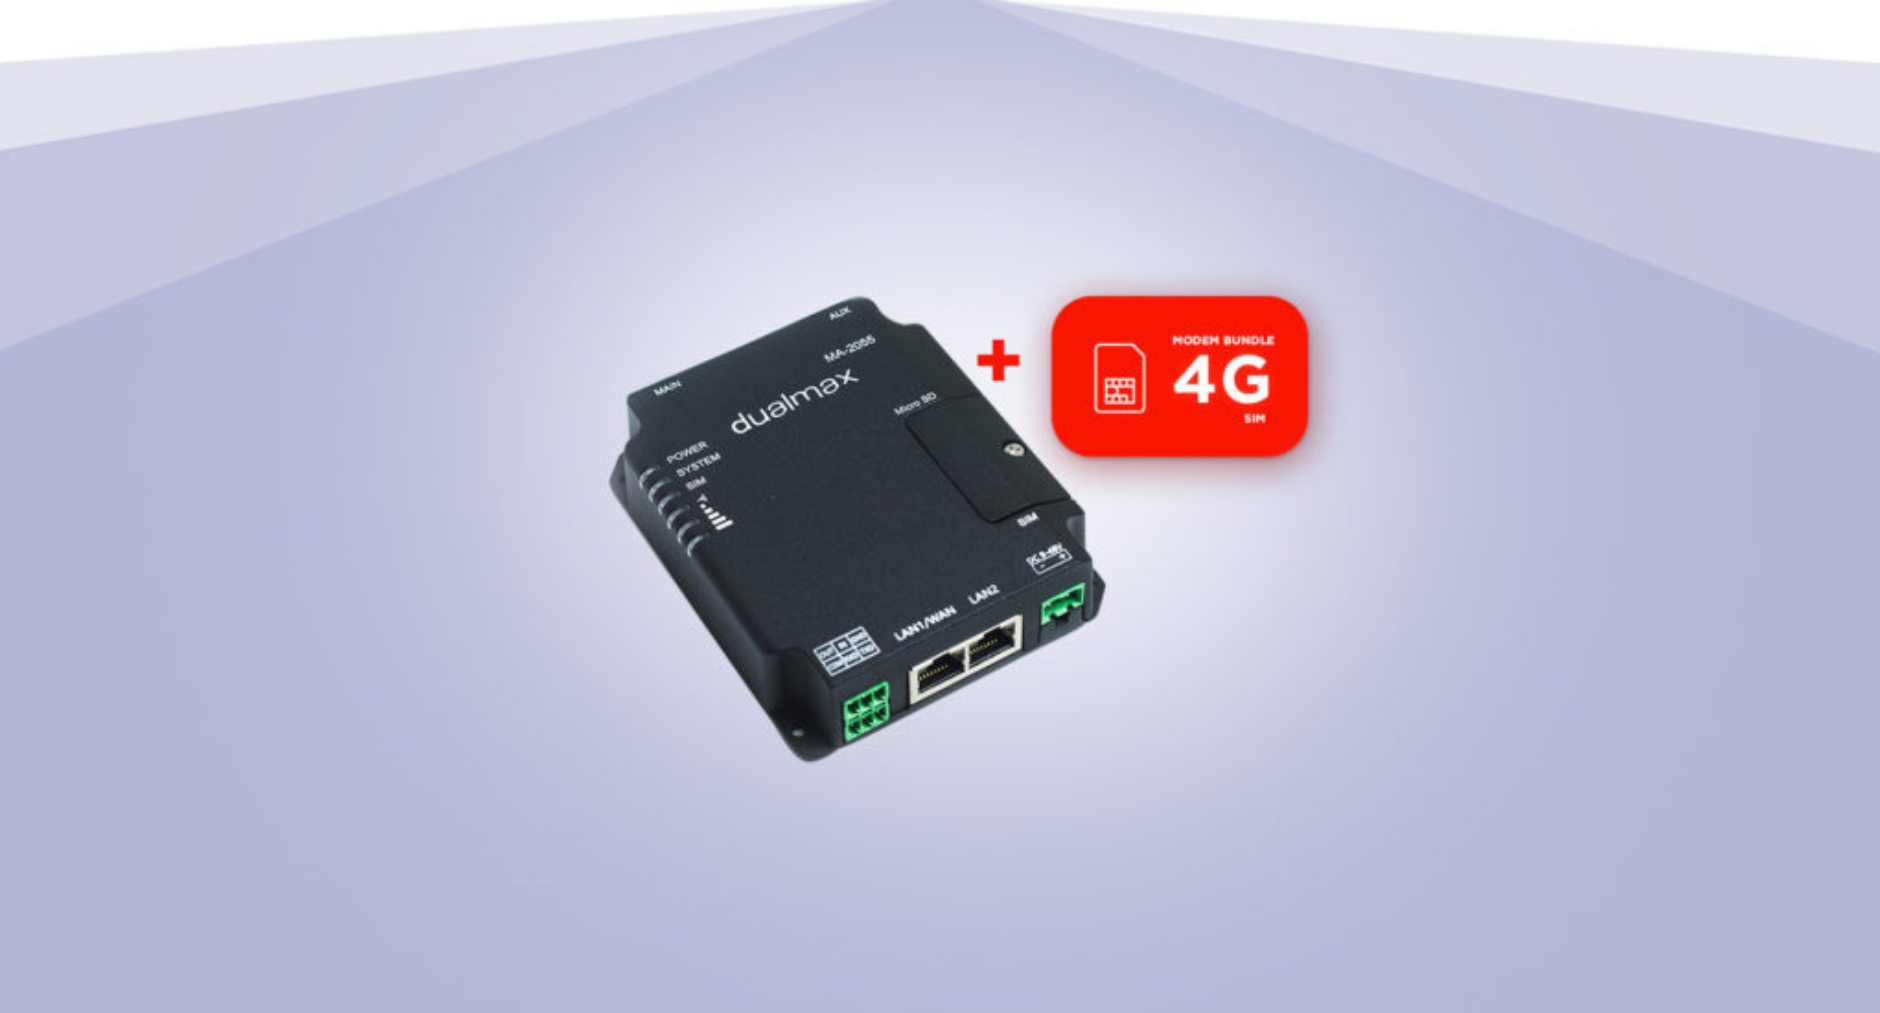 Introducing RFI's 4G SIM & Modem bundle packs